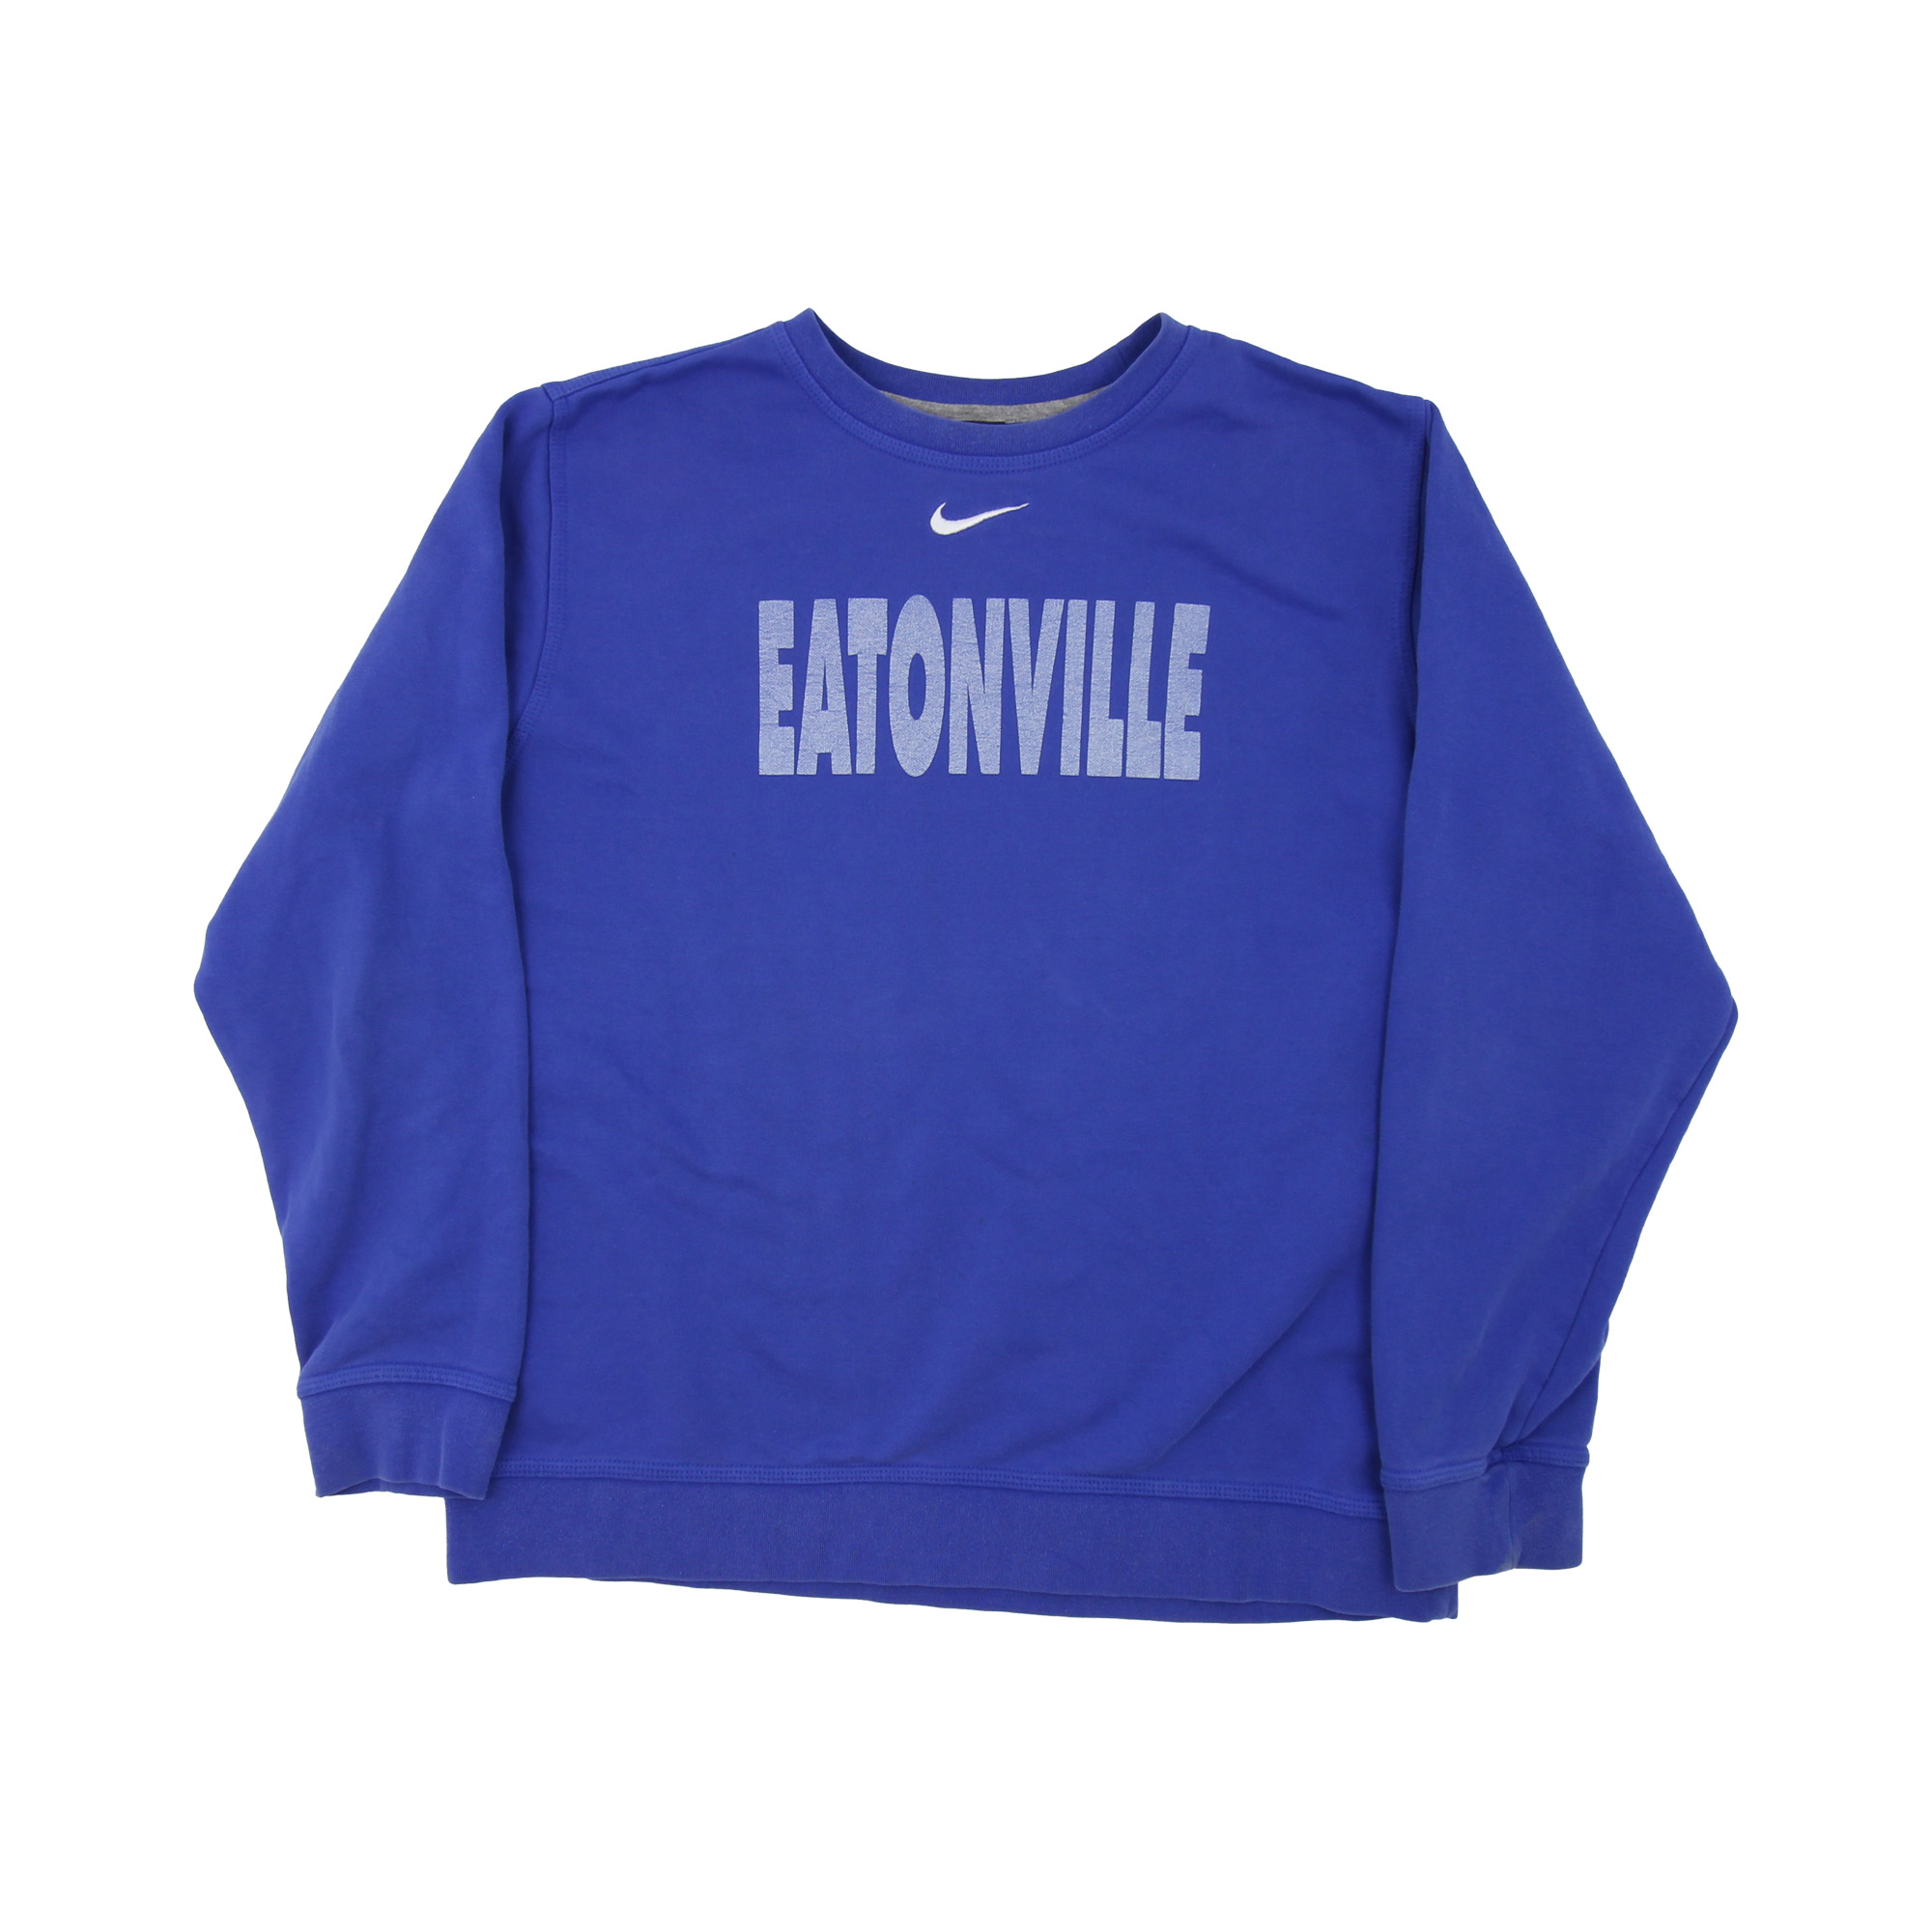 Nike Eatonvile Embroidered Logo Sweatshirt -  L/XL